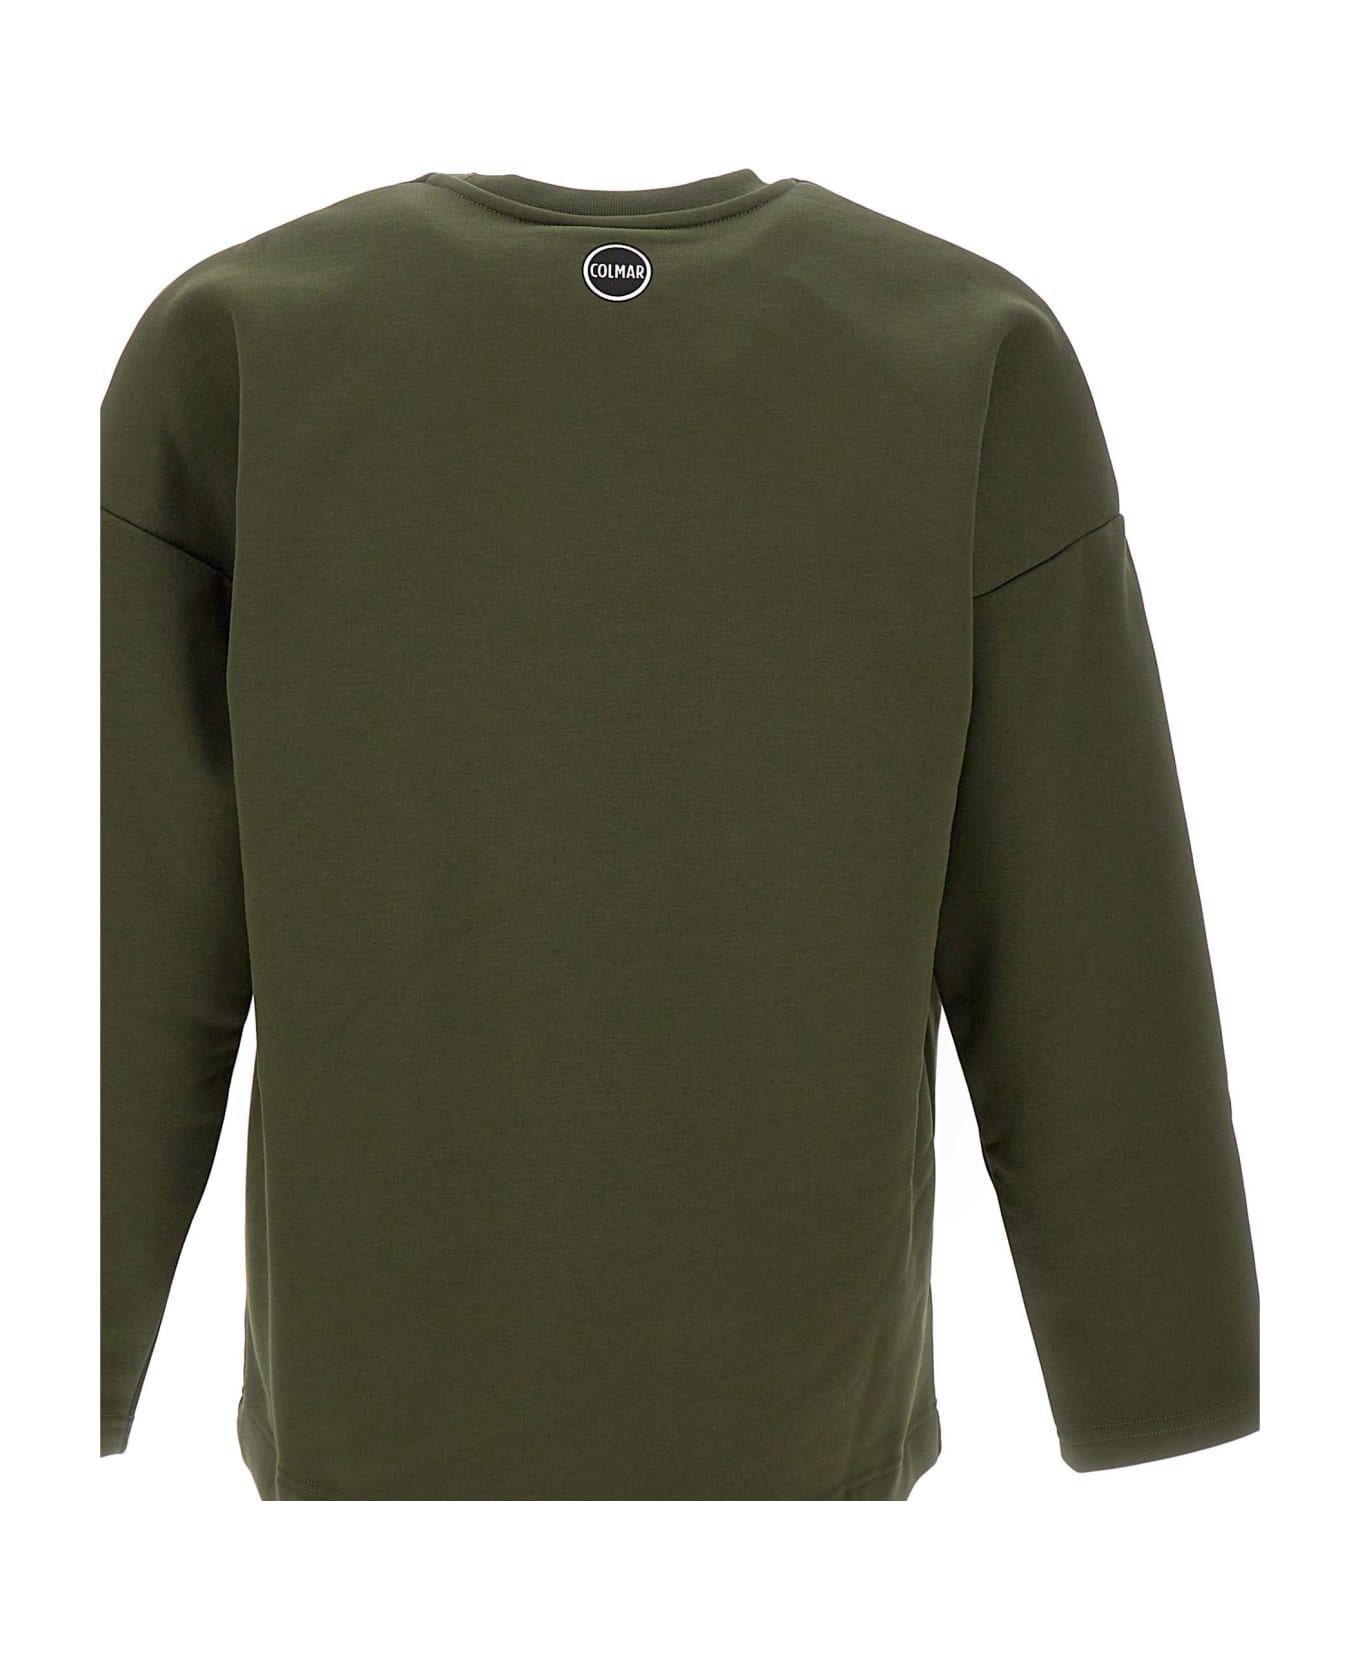 Colmar 'balance' Cotton Sweatshirt - Military